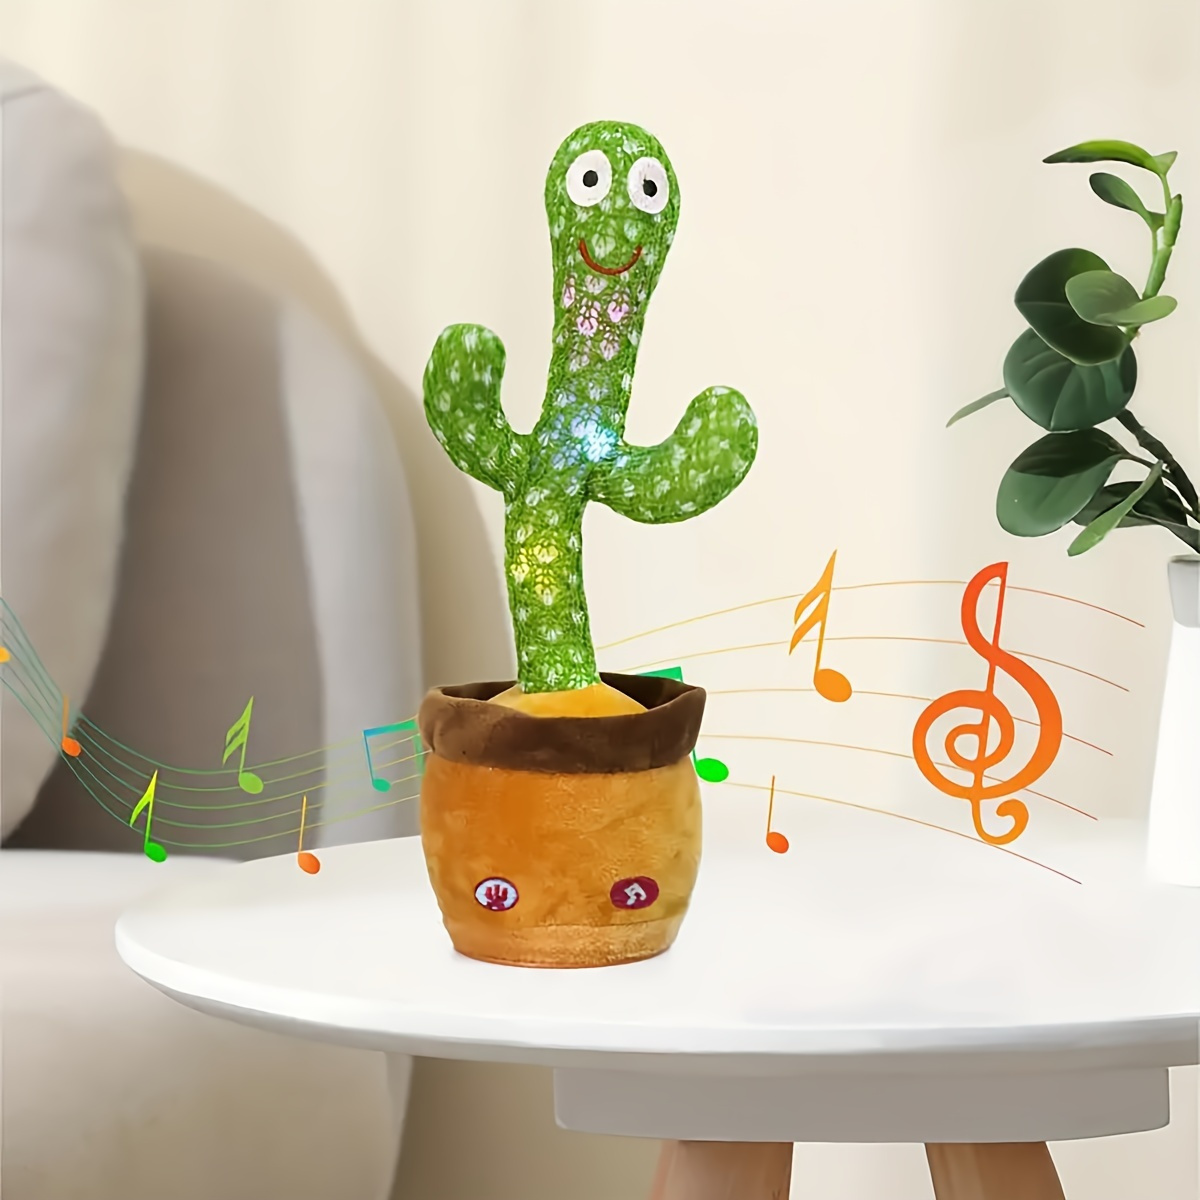 Juguete de cactus bailarín, juguete parlante, cactus que imita, repite lo  que dices, canta, repetir, baila